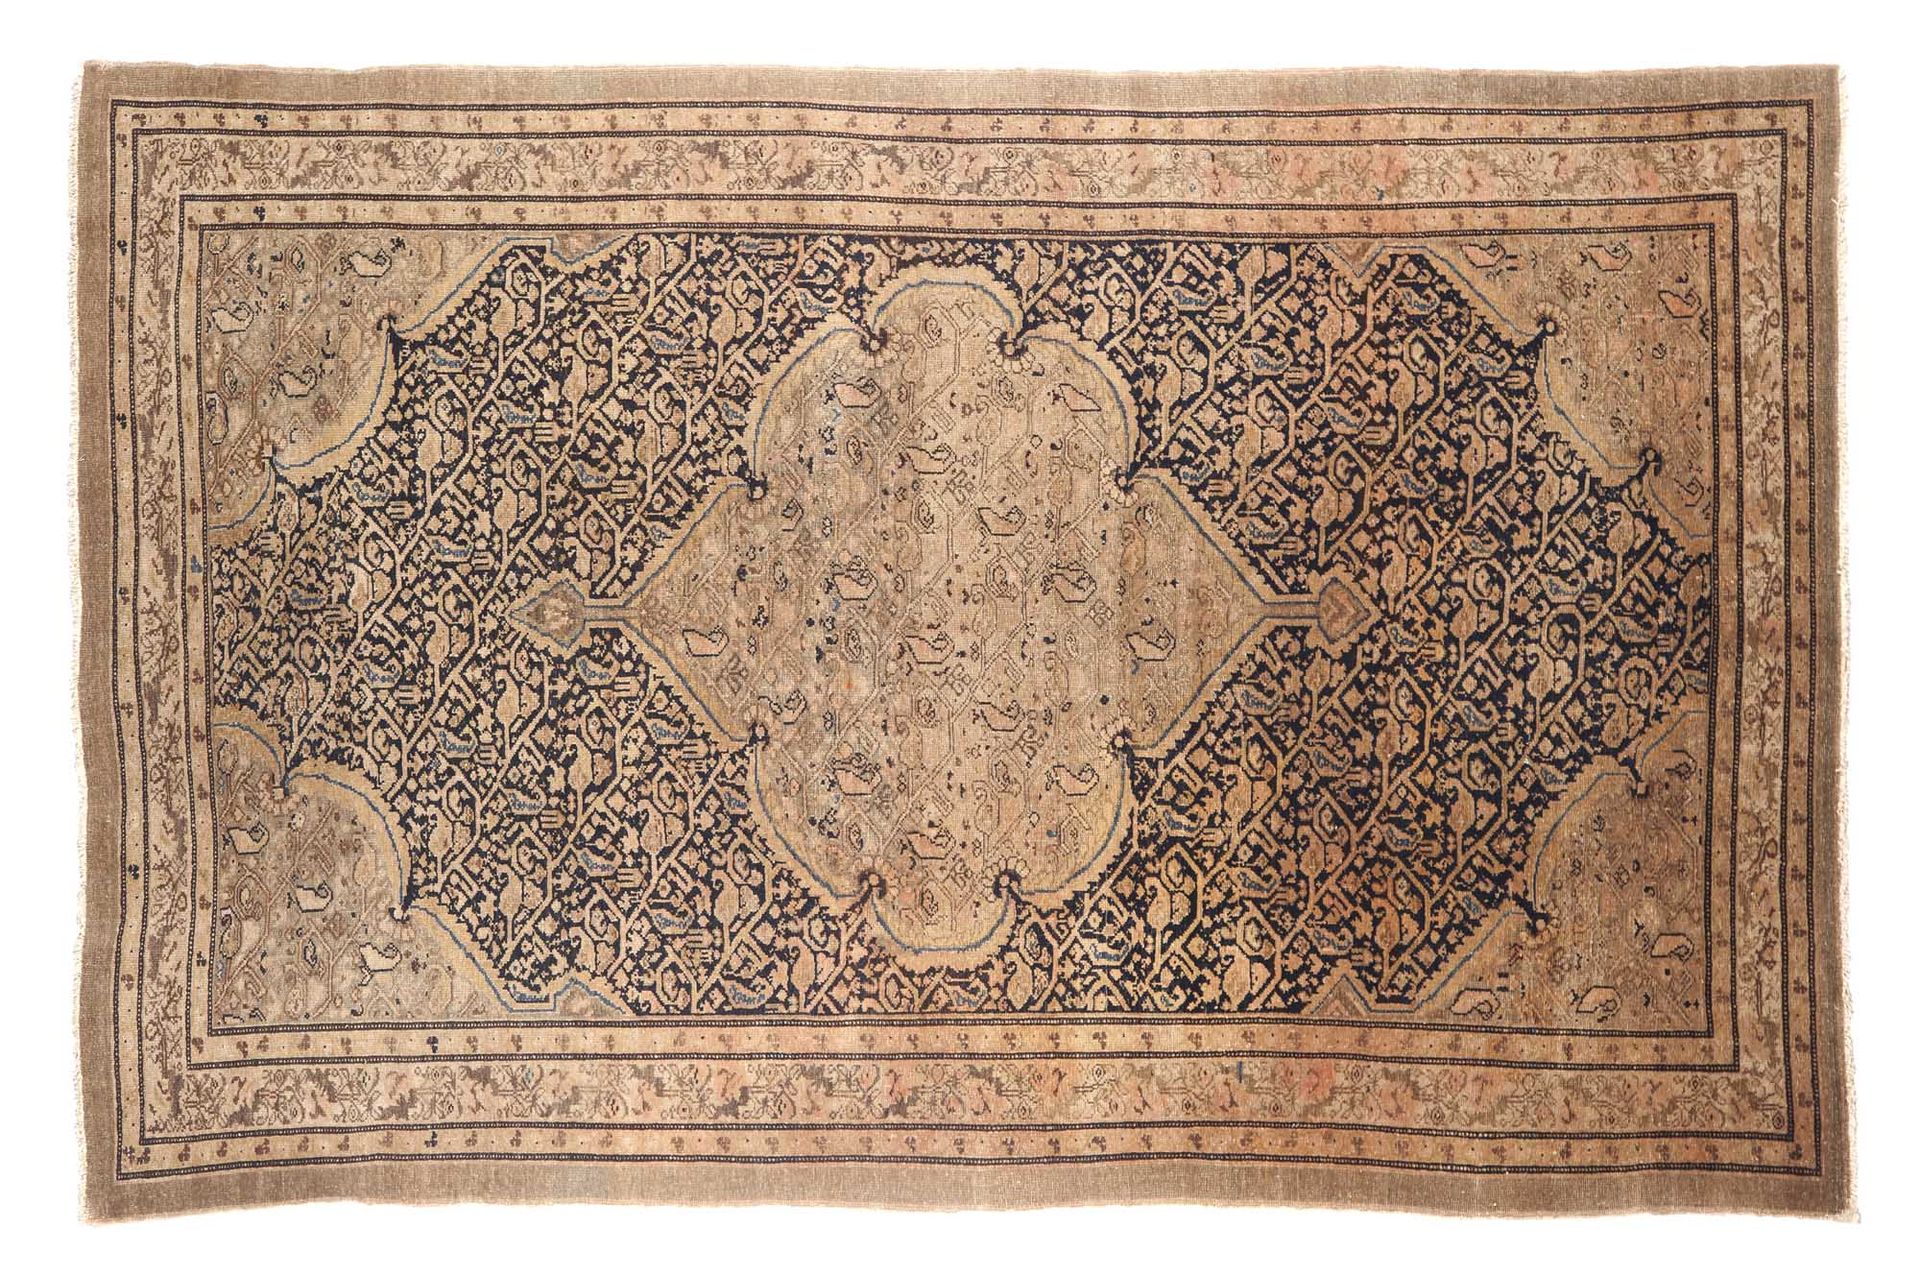 Null MELAYER carpet (Persia), late 19th century

Dimensions : 200 x 130cm

Techn&hellip;